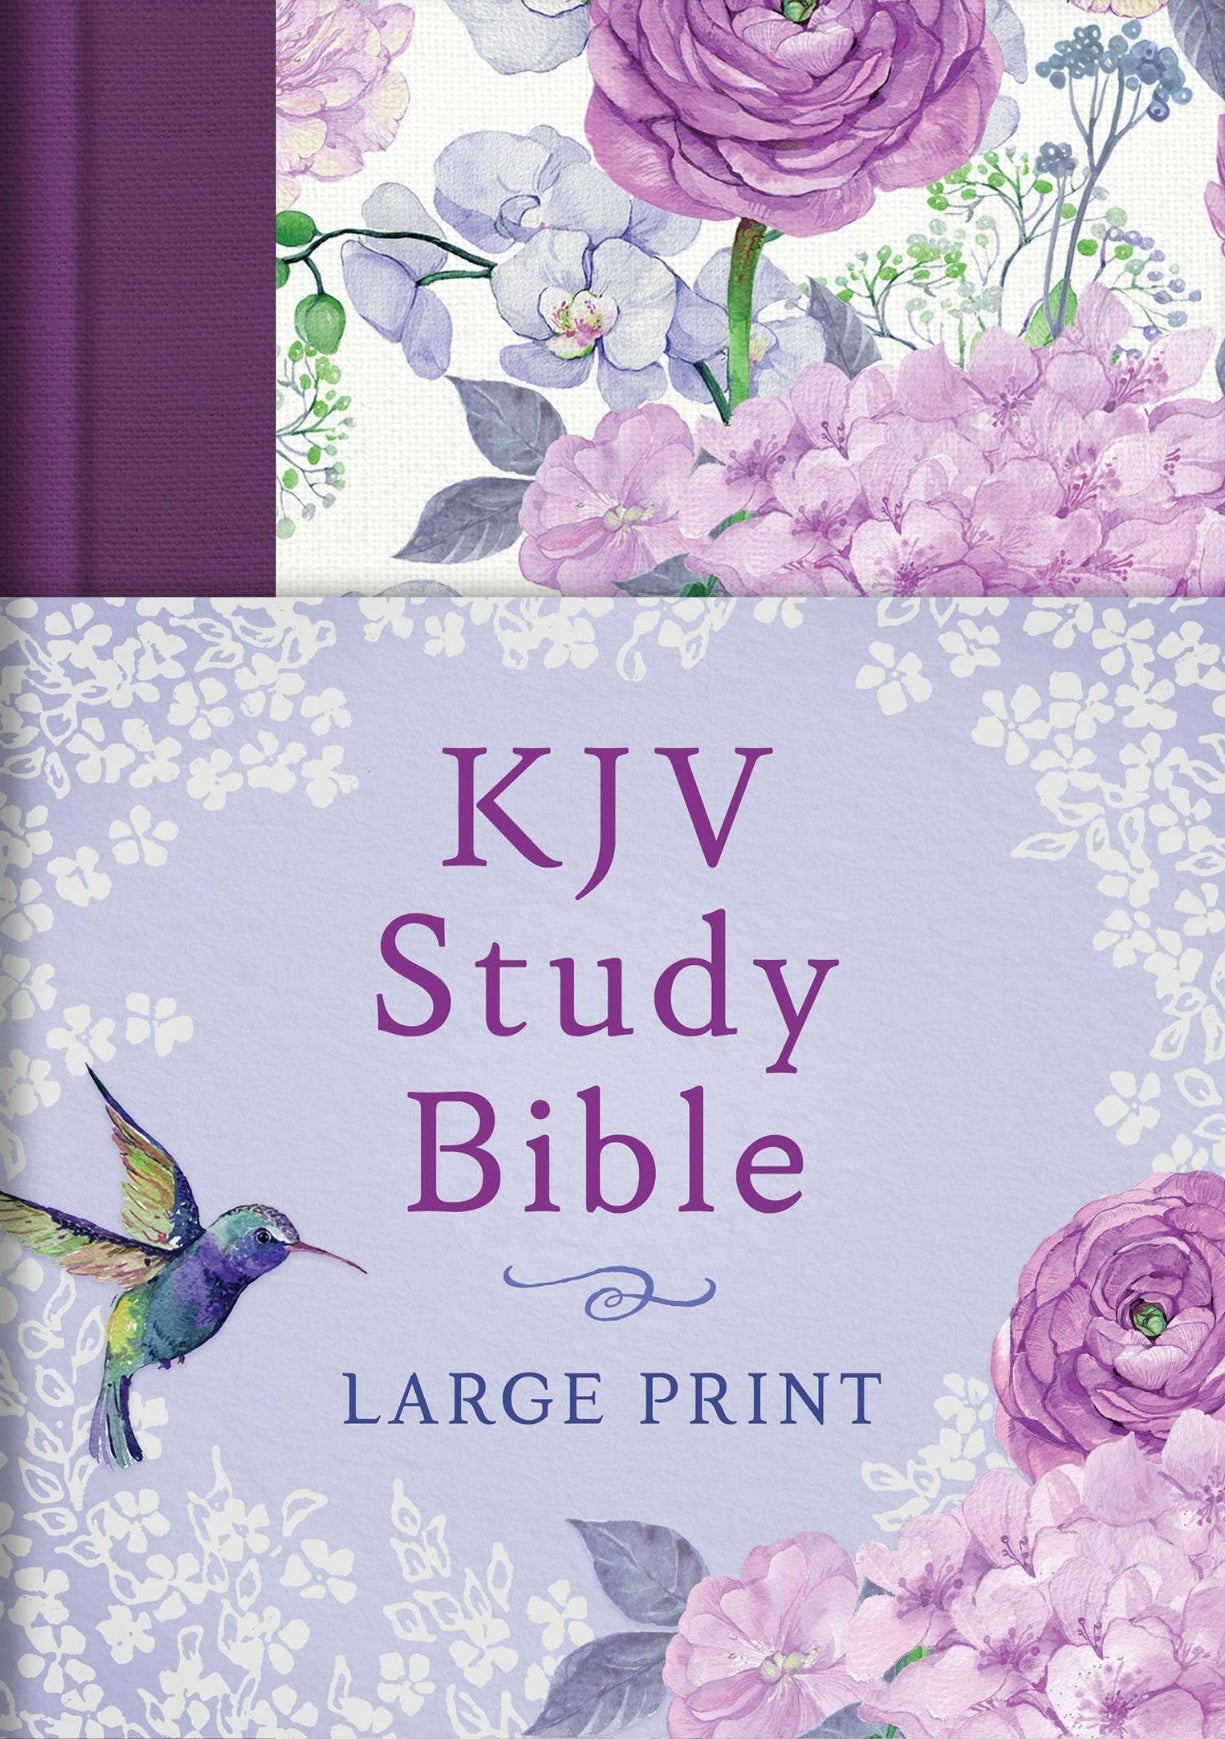 KJV Study Bible, Large Print [Hummingbird Lilacs]